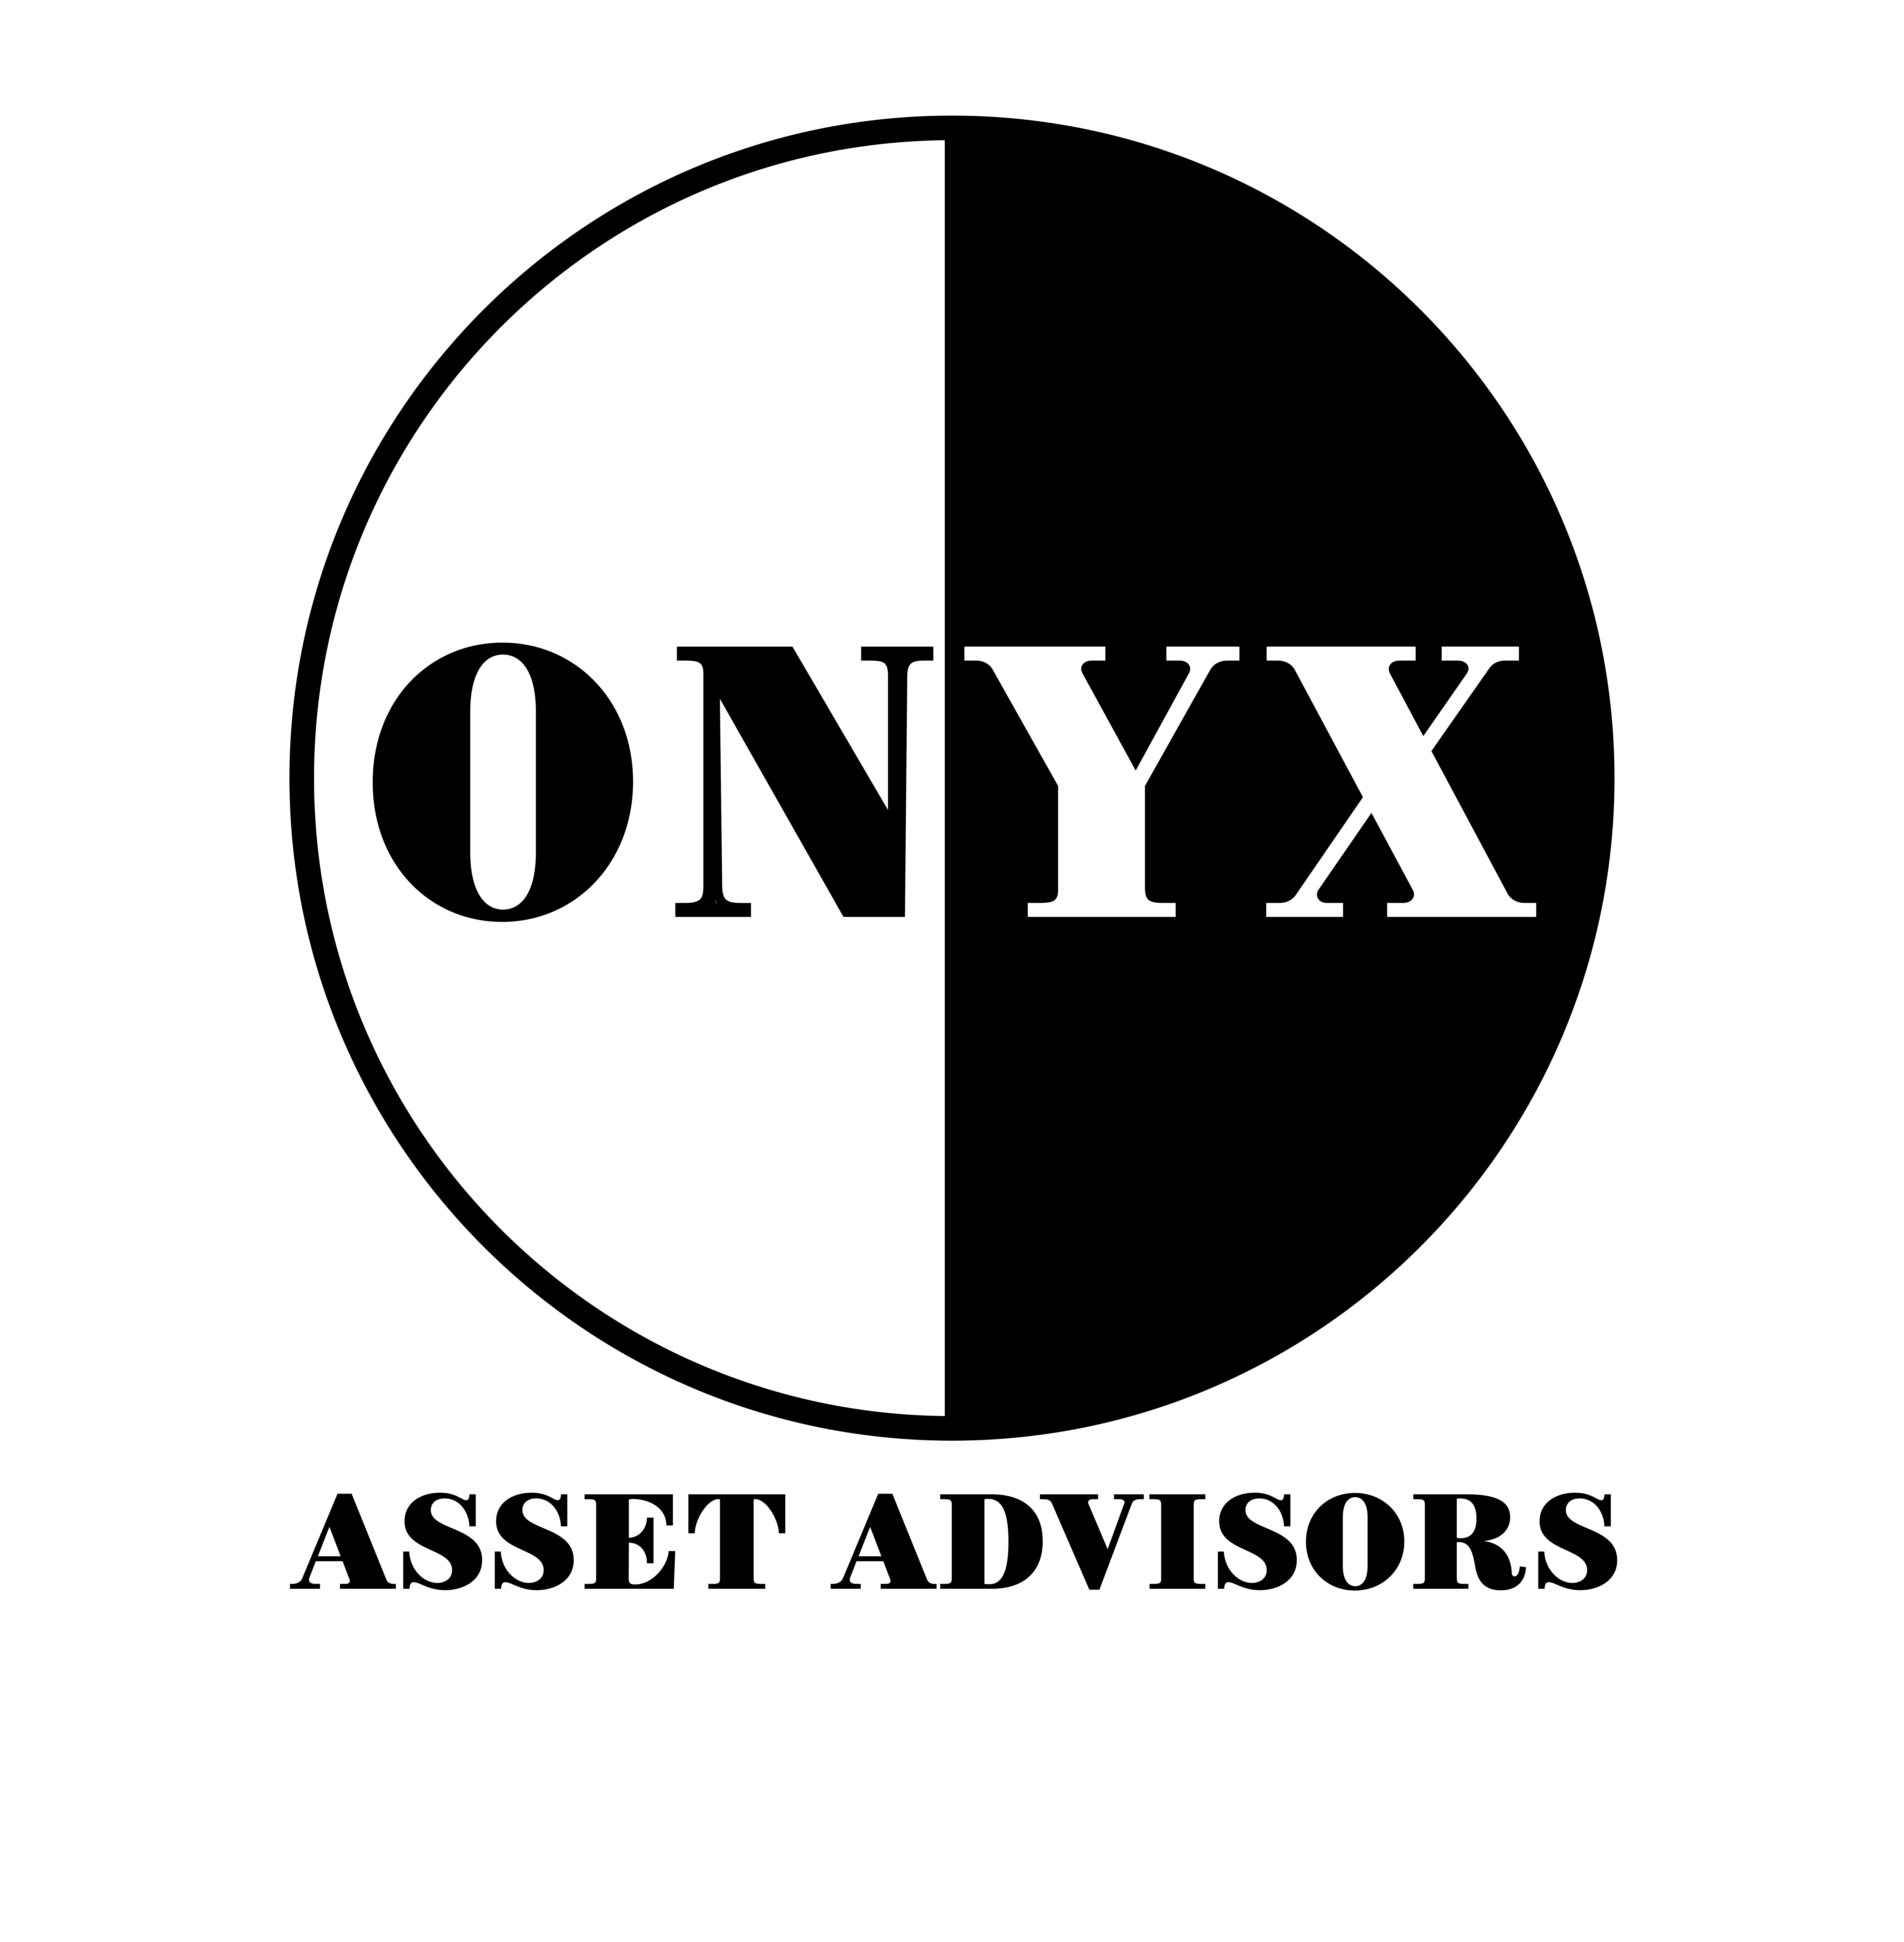 Think Onyx